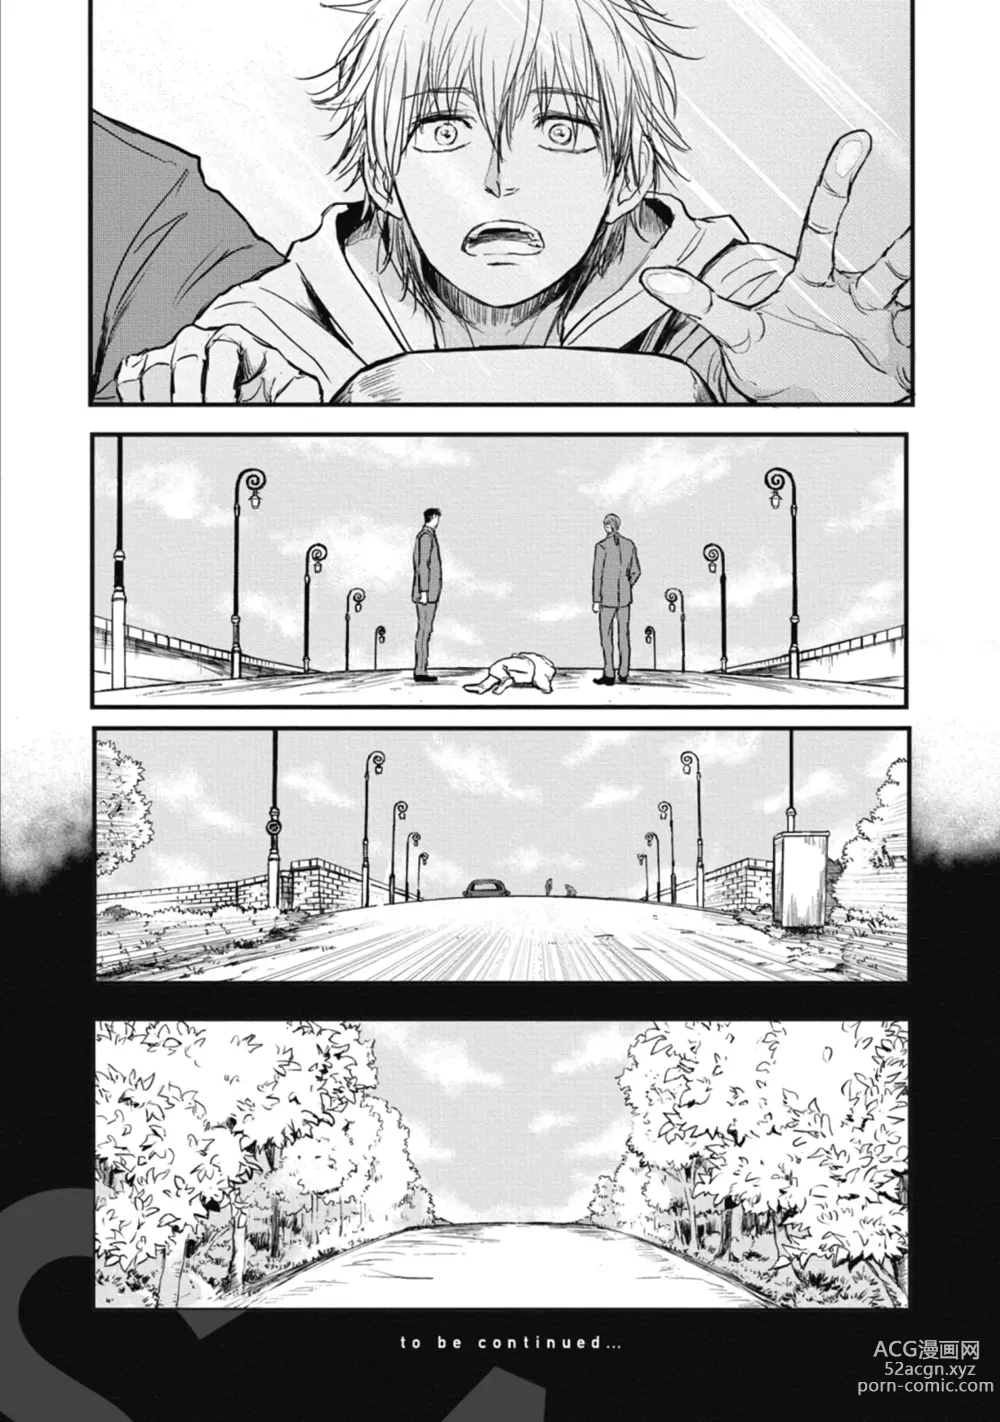 Page 150 of manga Papas Assassin. ~Futari Shite Tonde Yuku.~